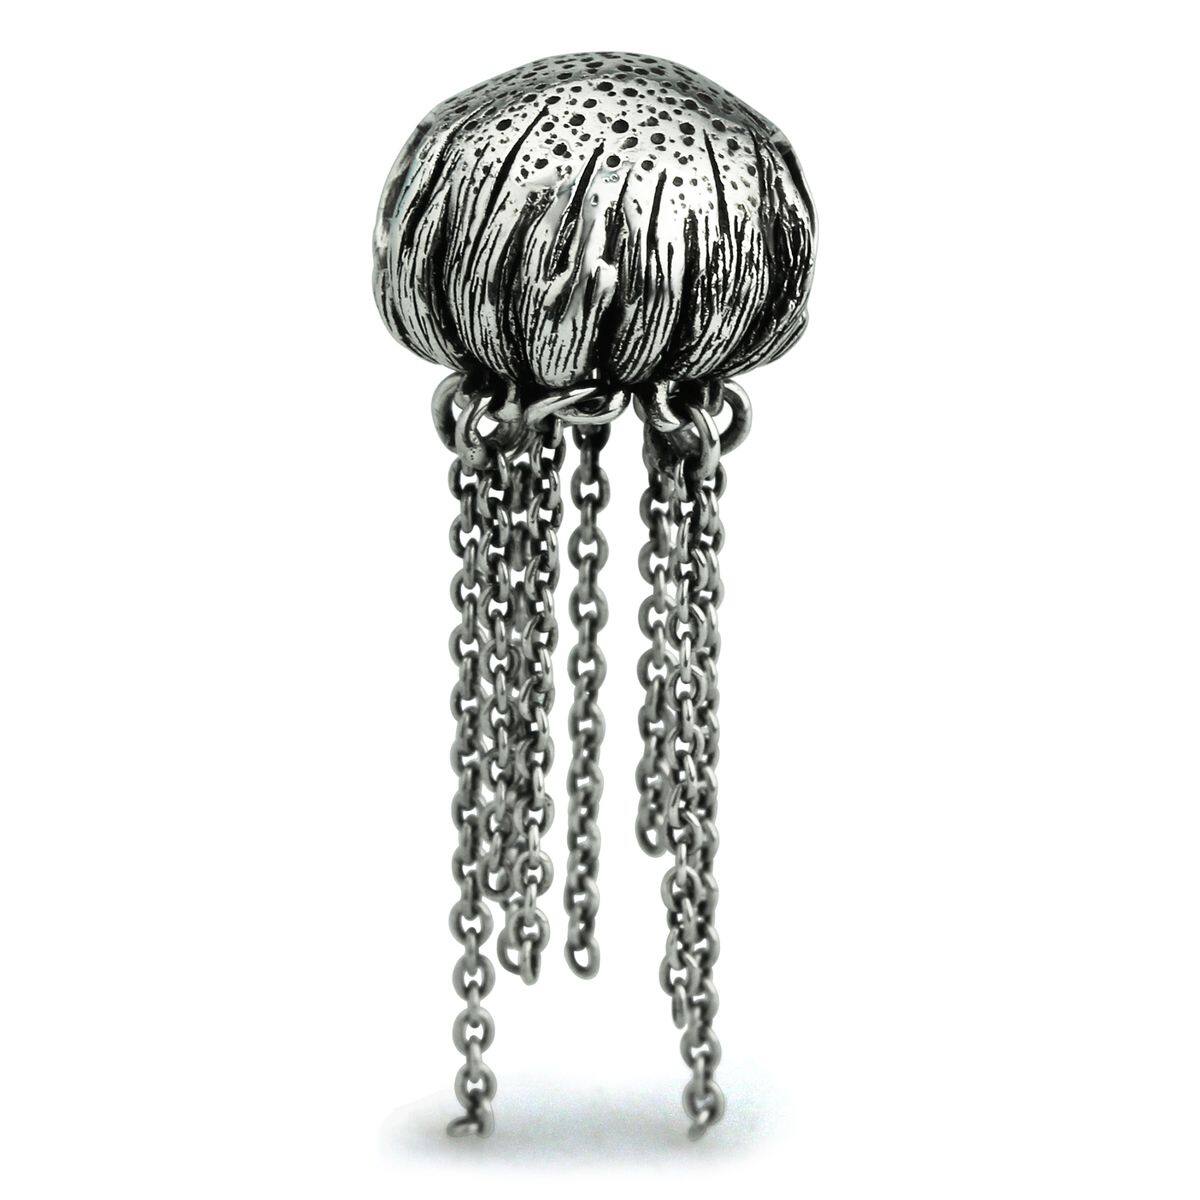 Jamie The Jellyfish OHM Beads BOTM Bead of the Month Silver 925 Charm เครื่องประดับ แก้ว บีด